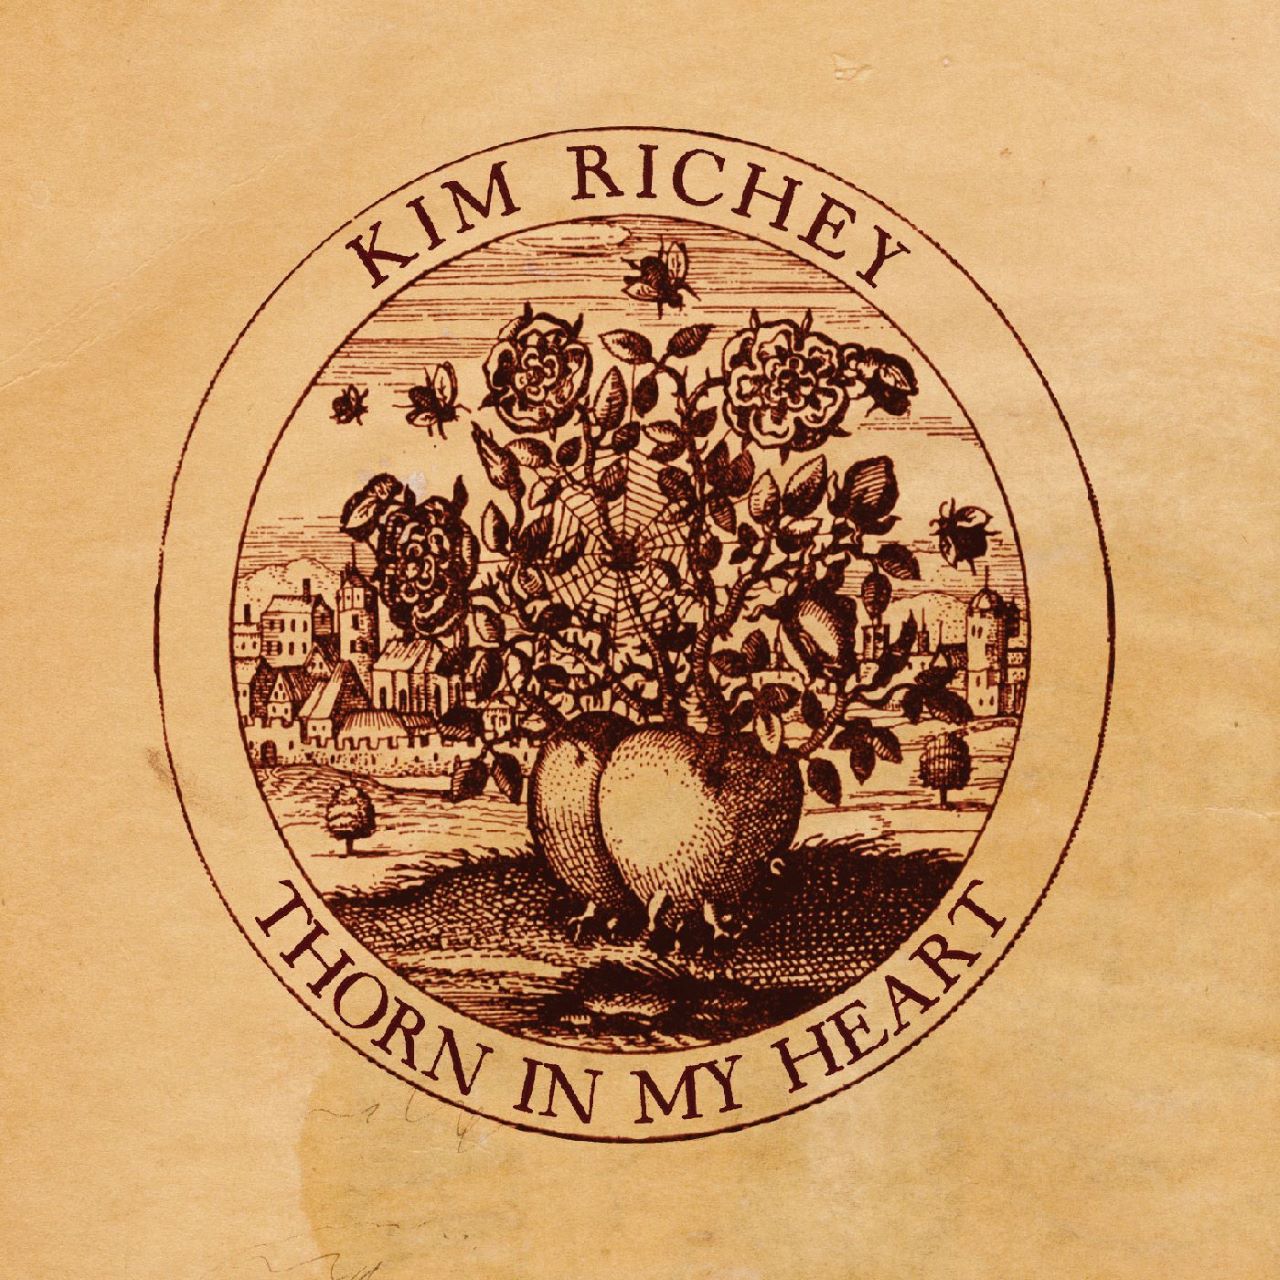 Kim Richey - Thorn In My Heart cover album